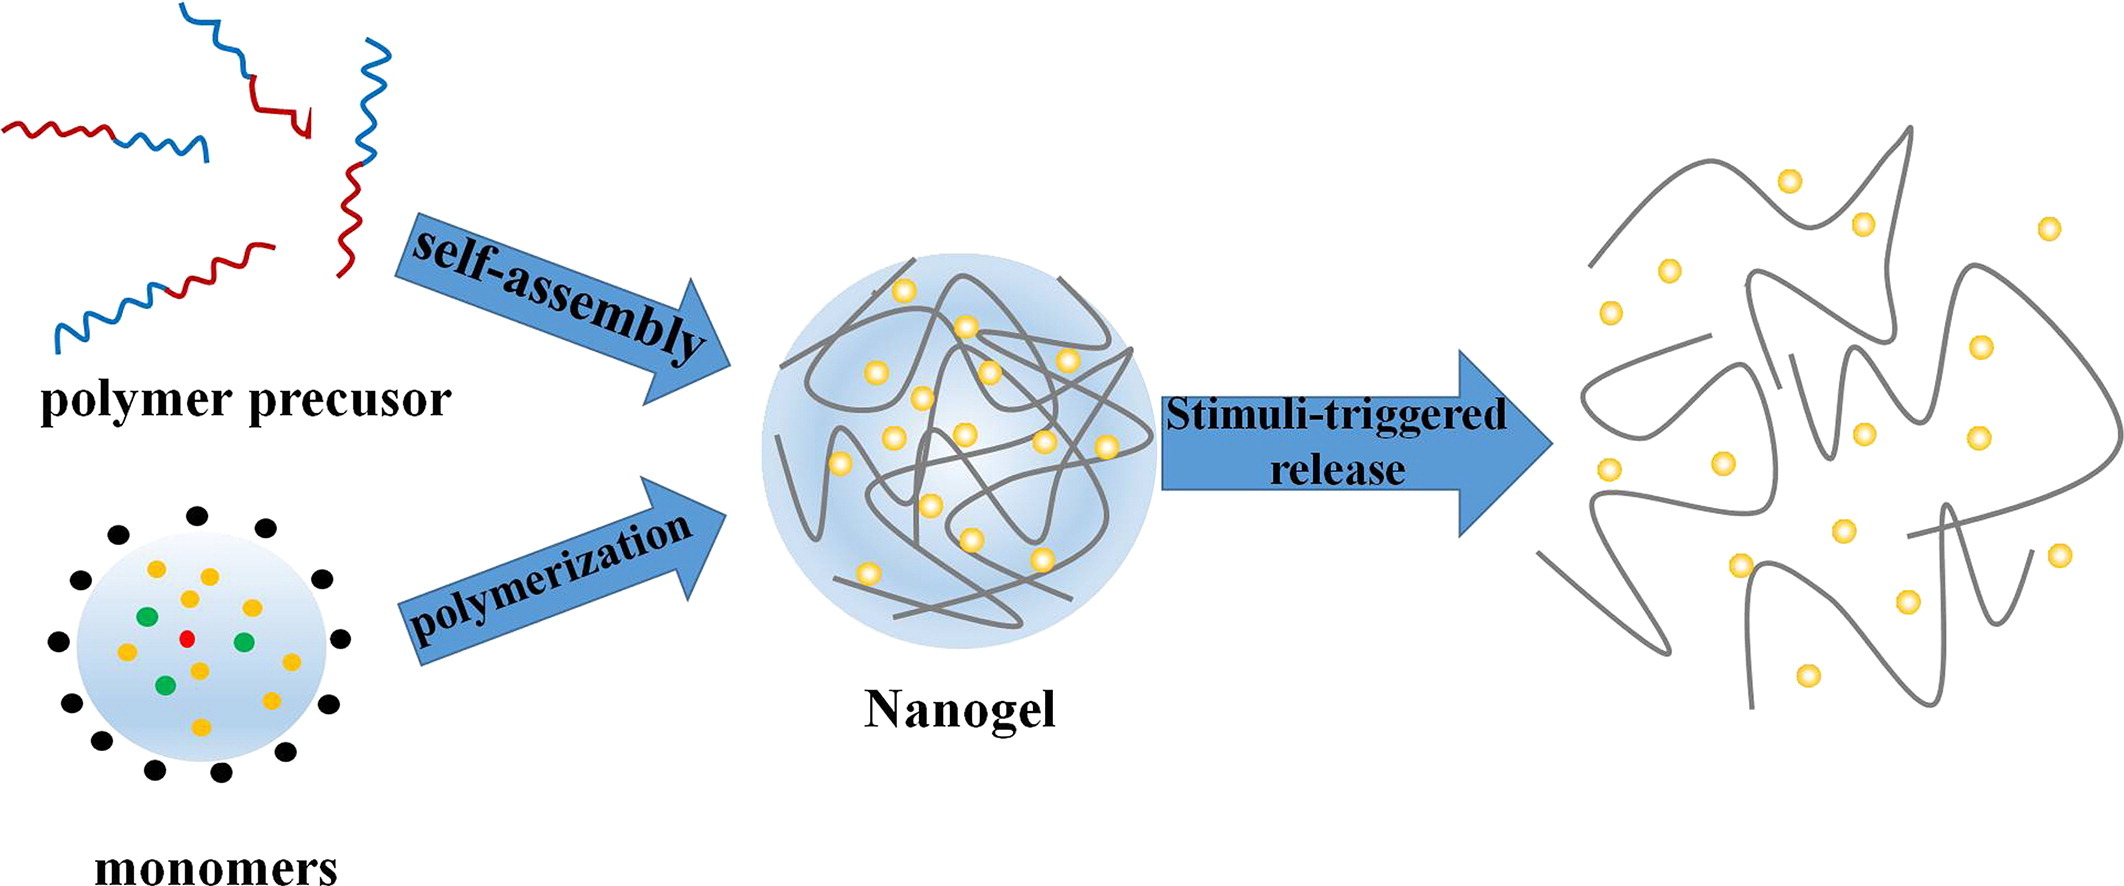 The application of nanogel in drug delivery